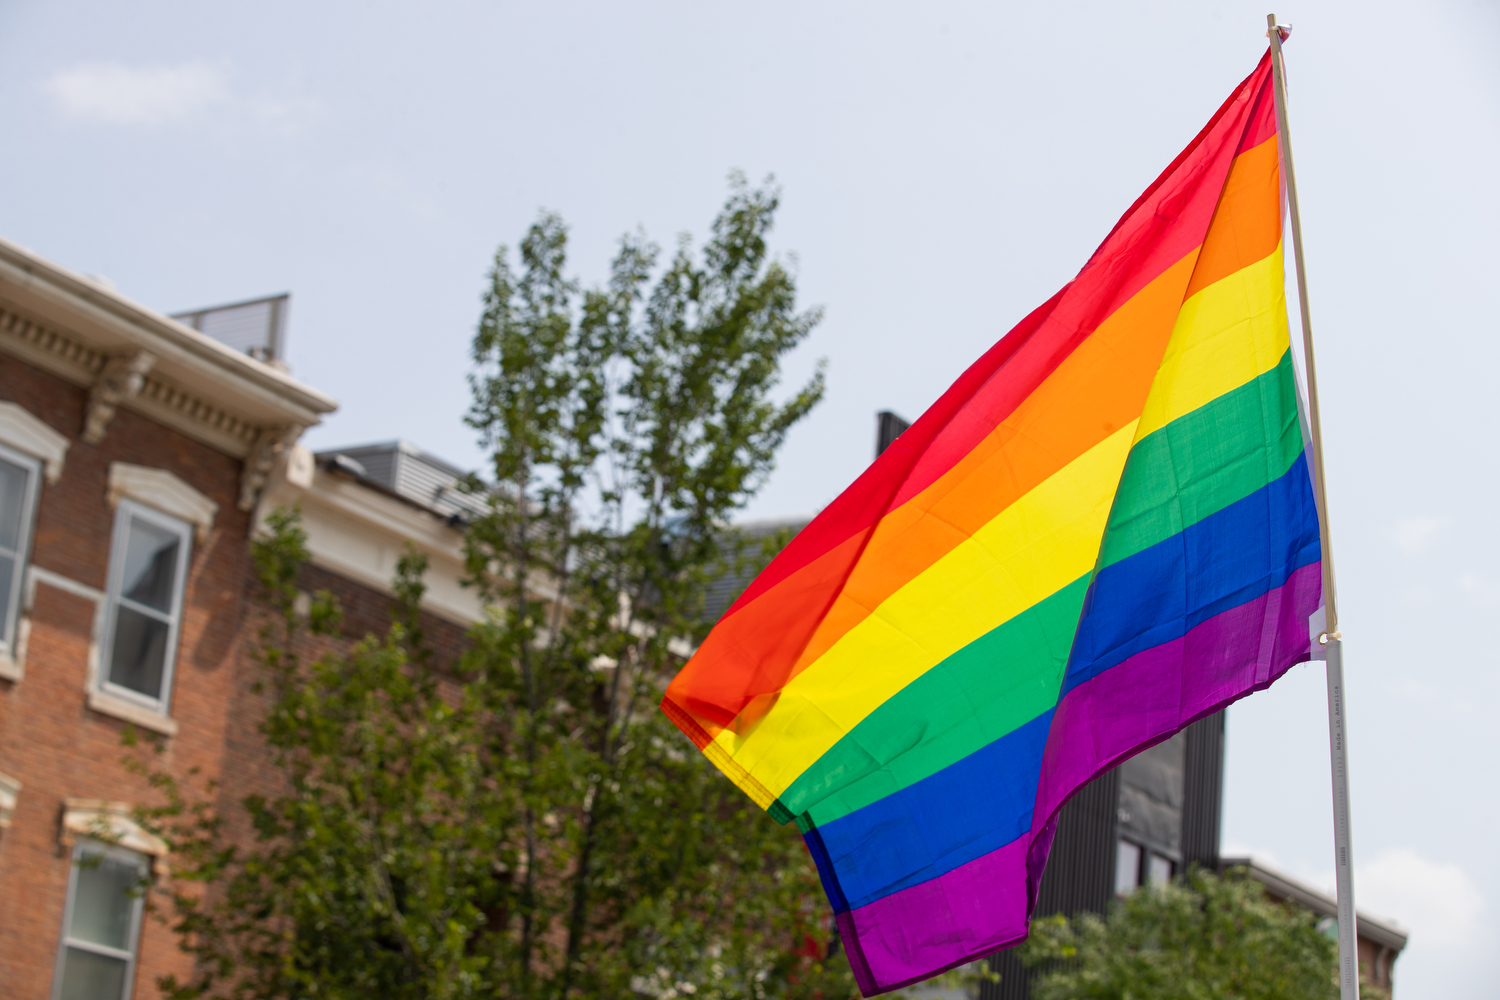 UI Pride House program coordinator steps down after six years